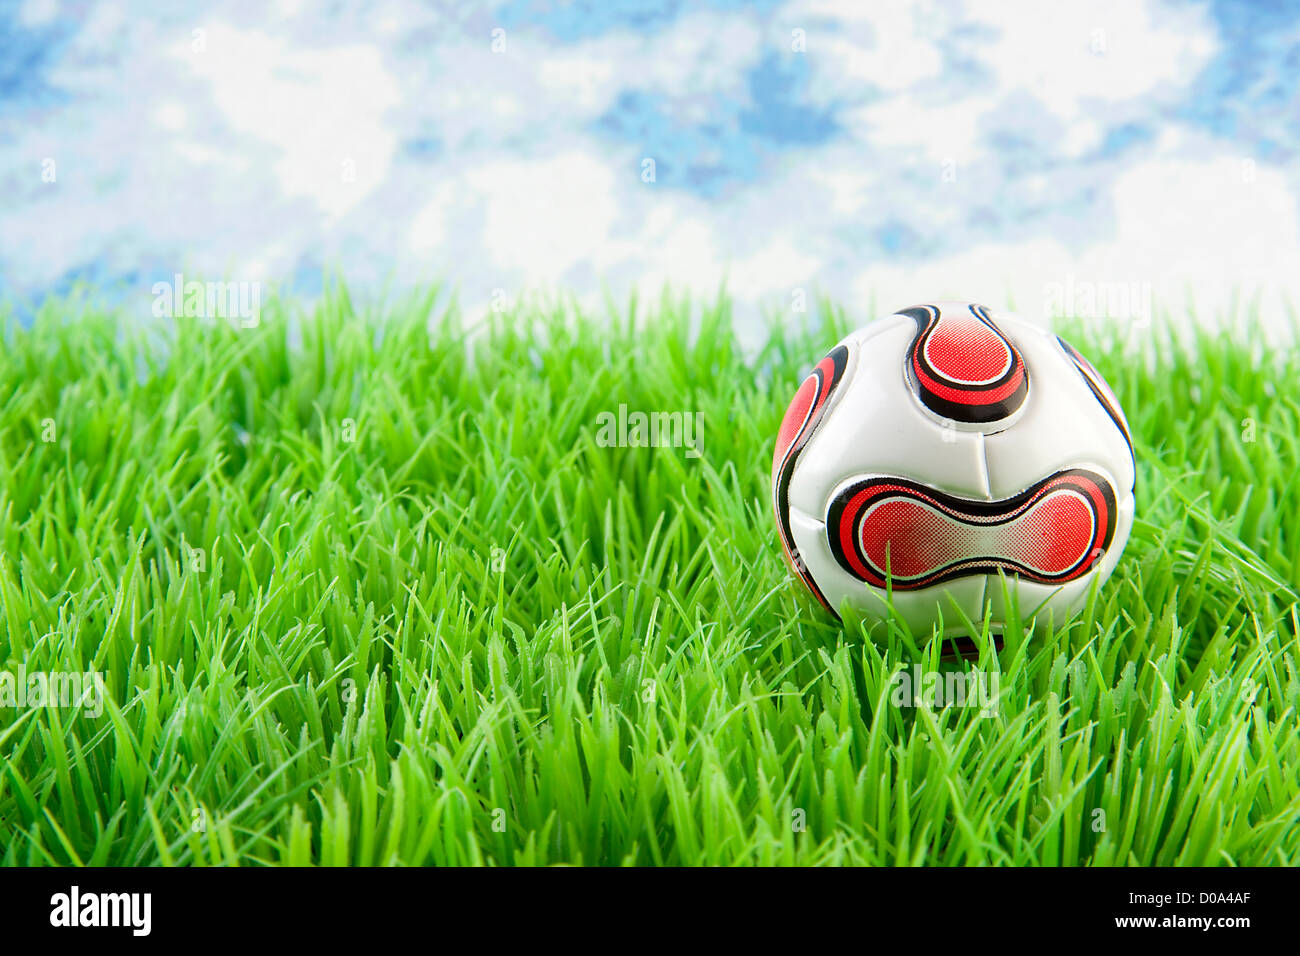 Soccer ball on grass against blue cloudy sky Stock Photo